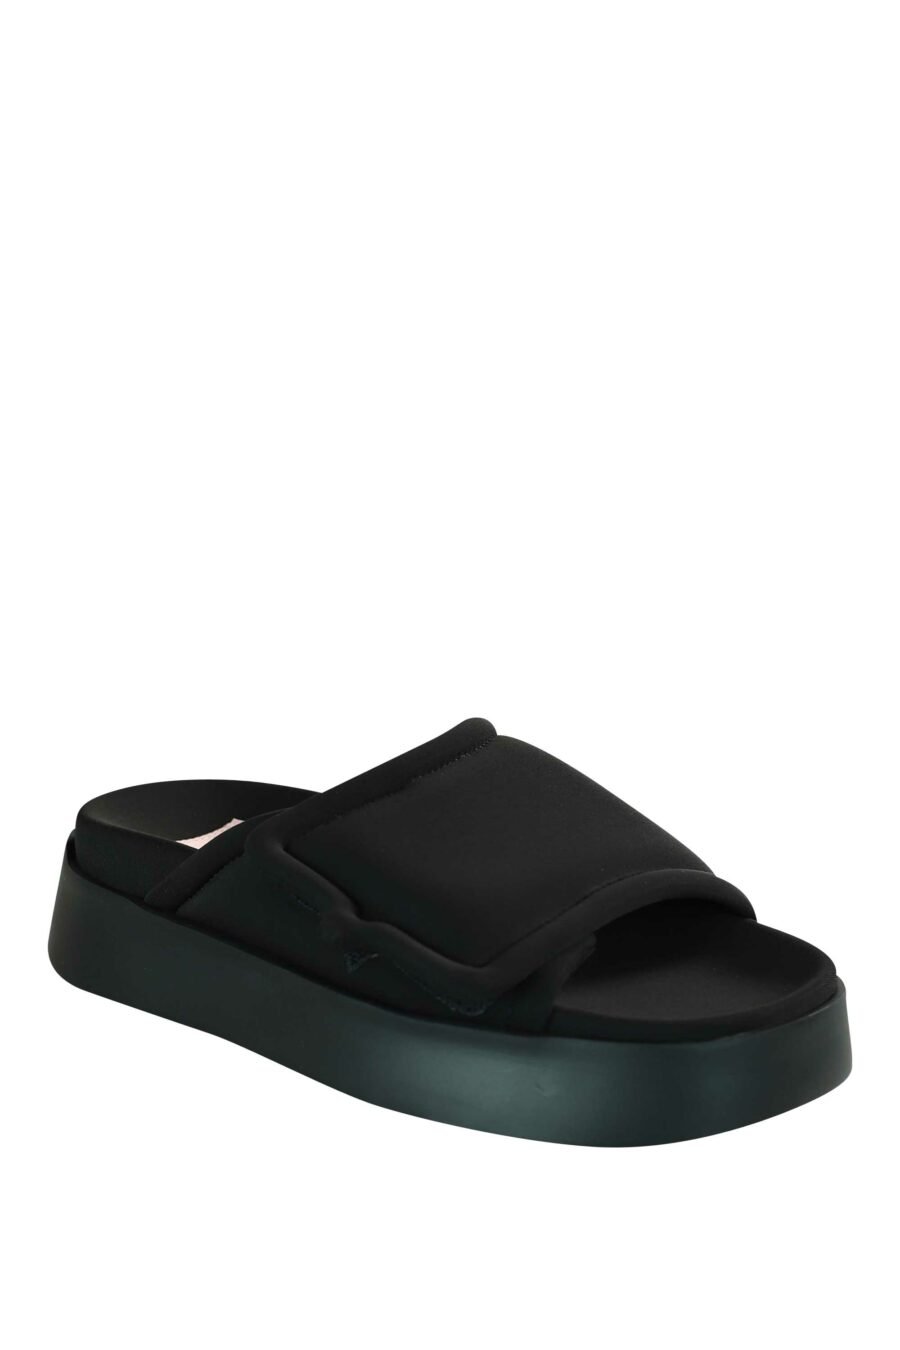 Black sandals with velcro and black platform - 8059482630771 2